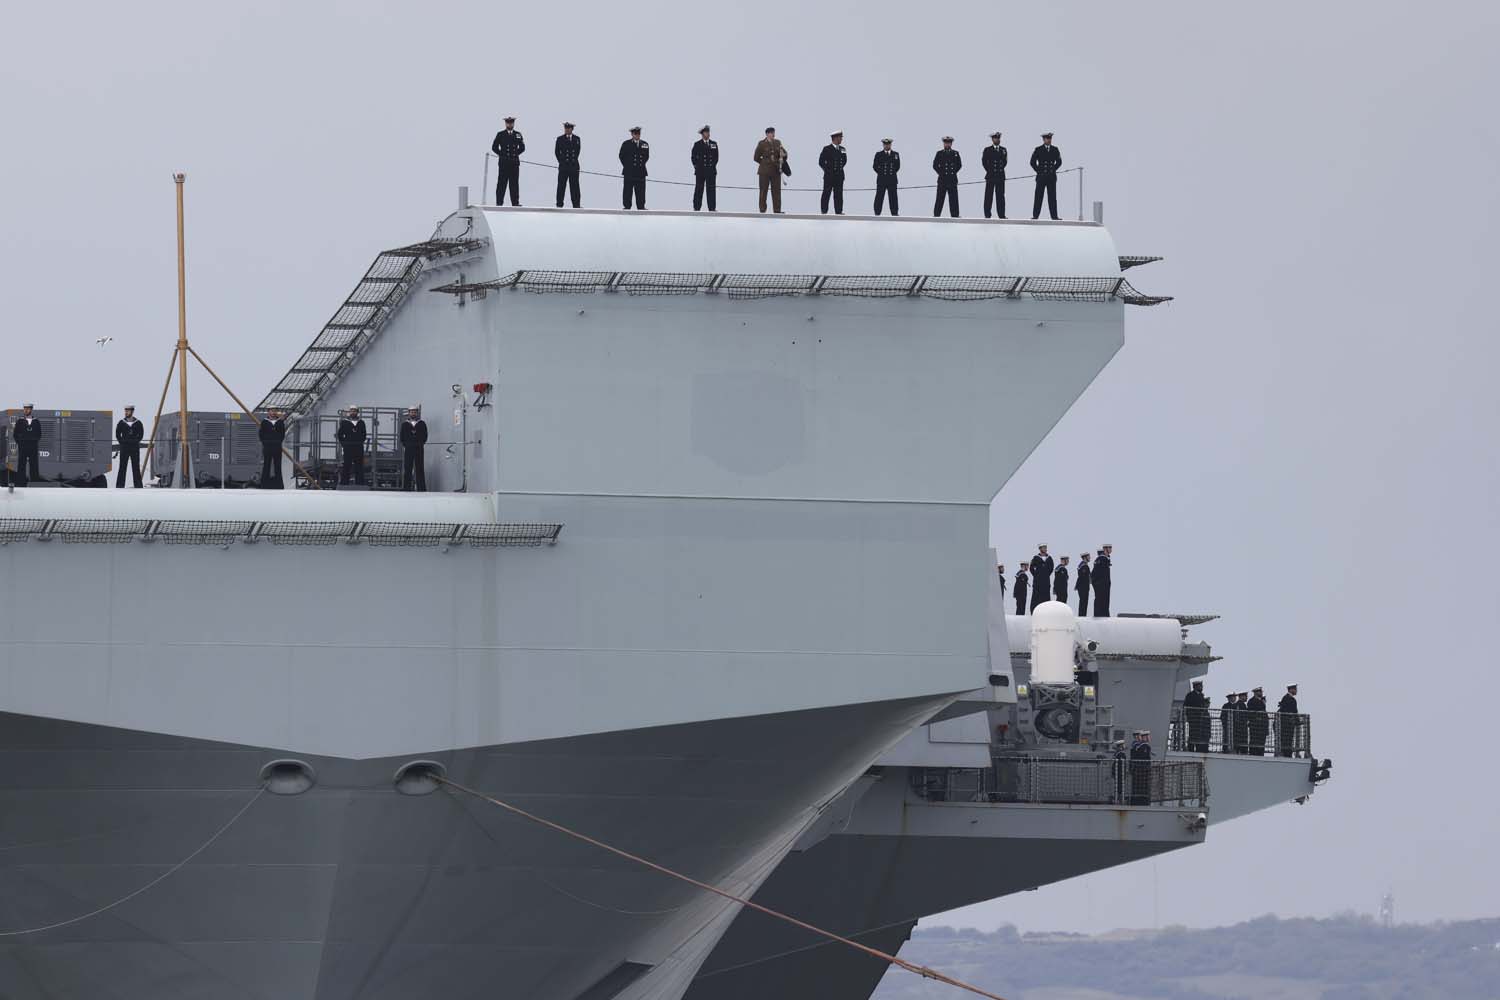 United Kingdom Carrier Strike Group Prepares for Final Test Ahead of Global Deployment